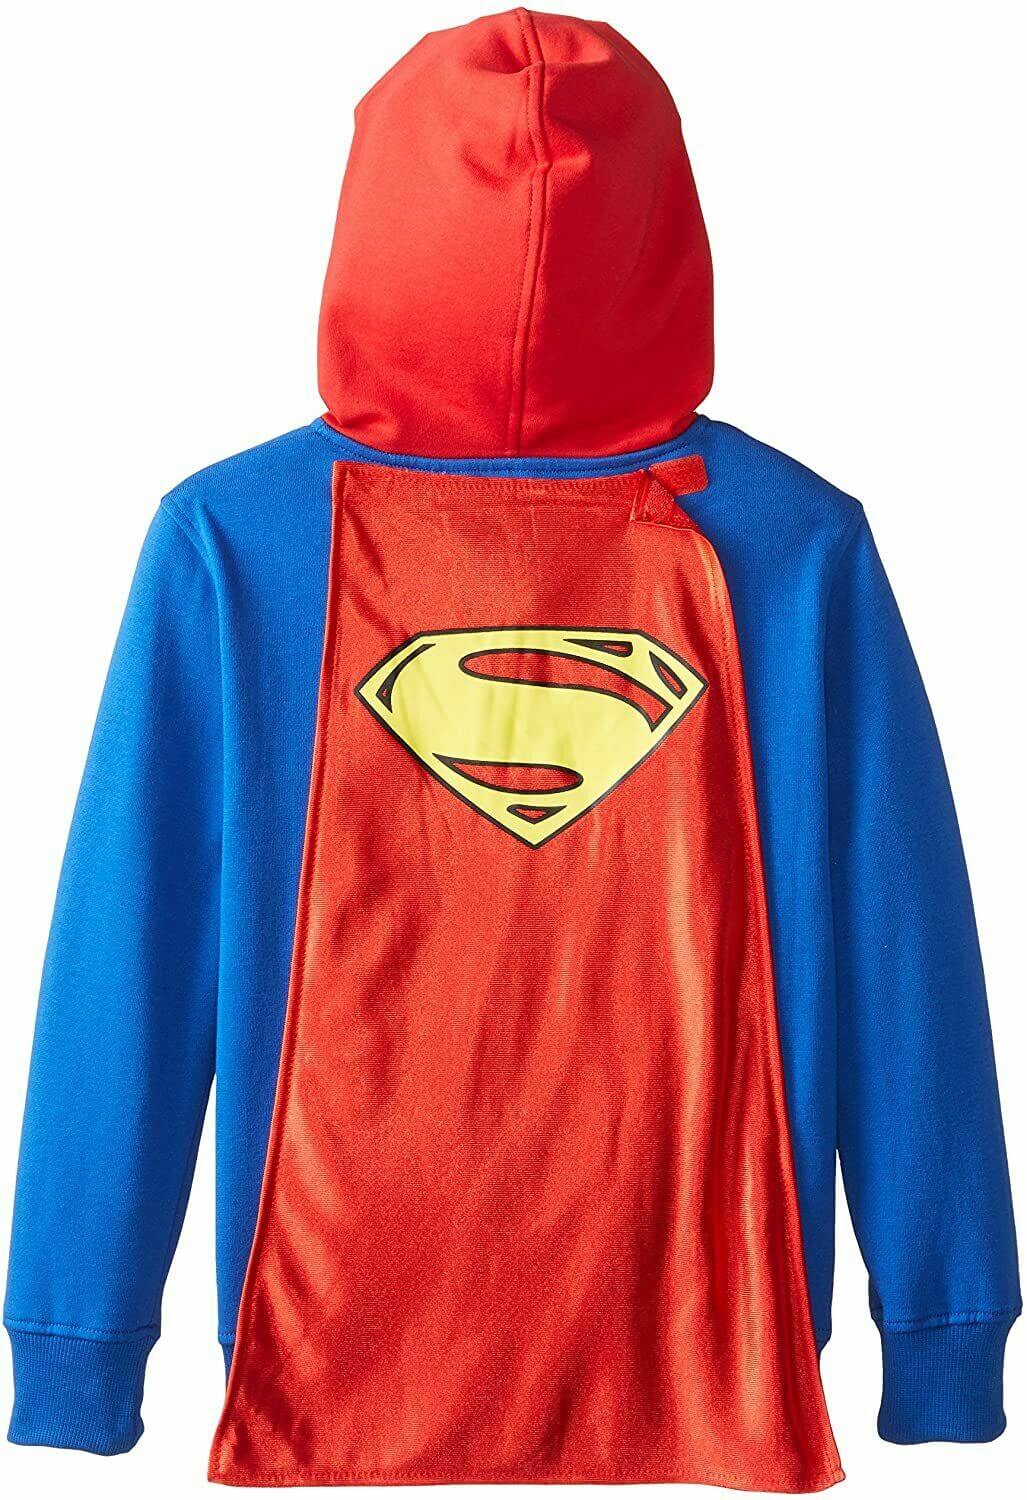 DC Youth Superman Sweatshirt Hoodie With Cape